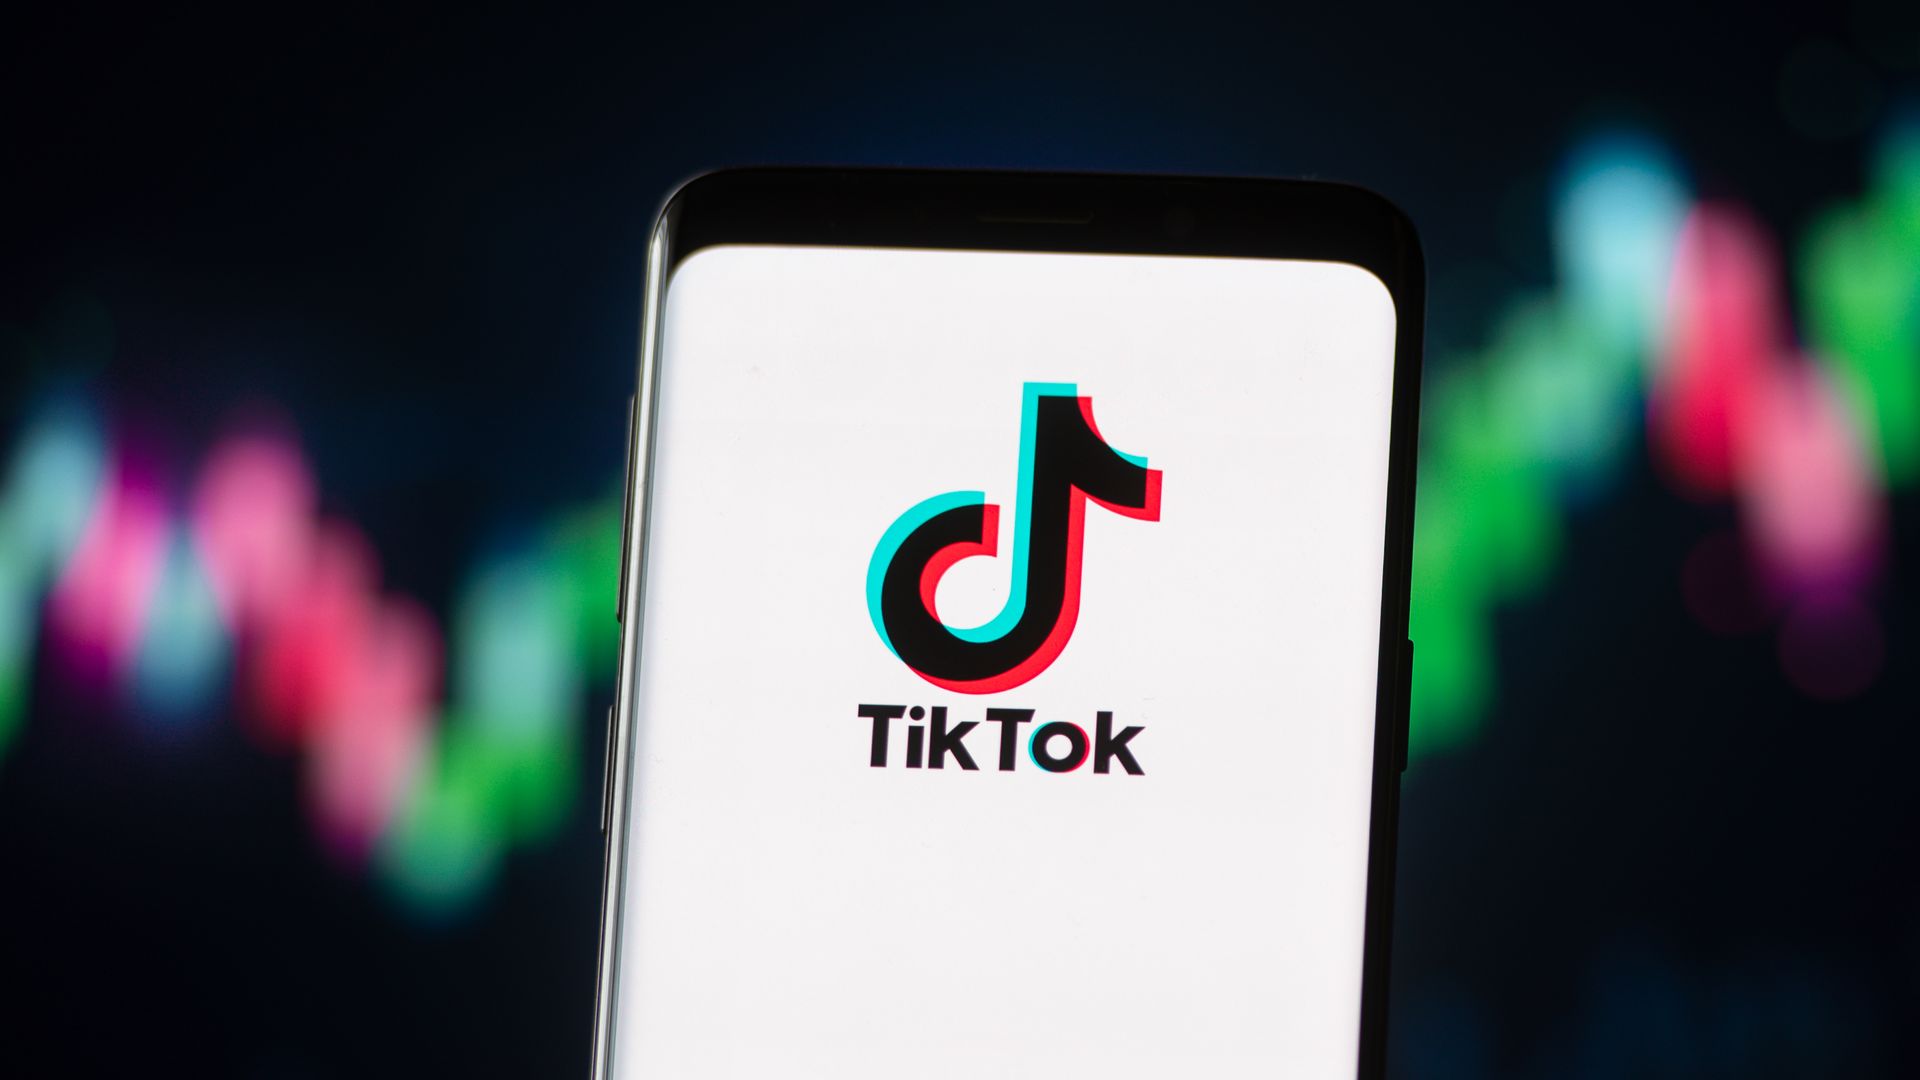 Photo illustration of the TikTok logo displayed on a smartphone